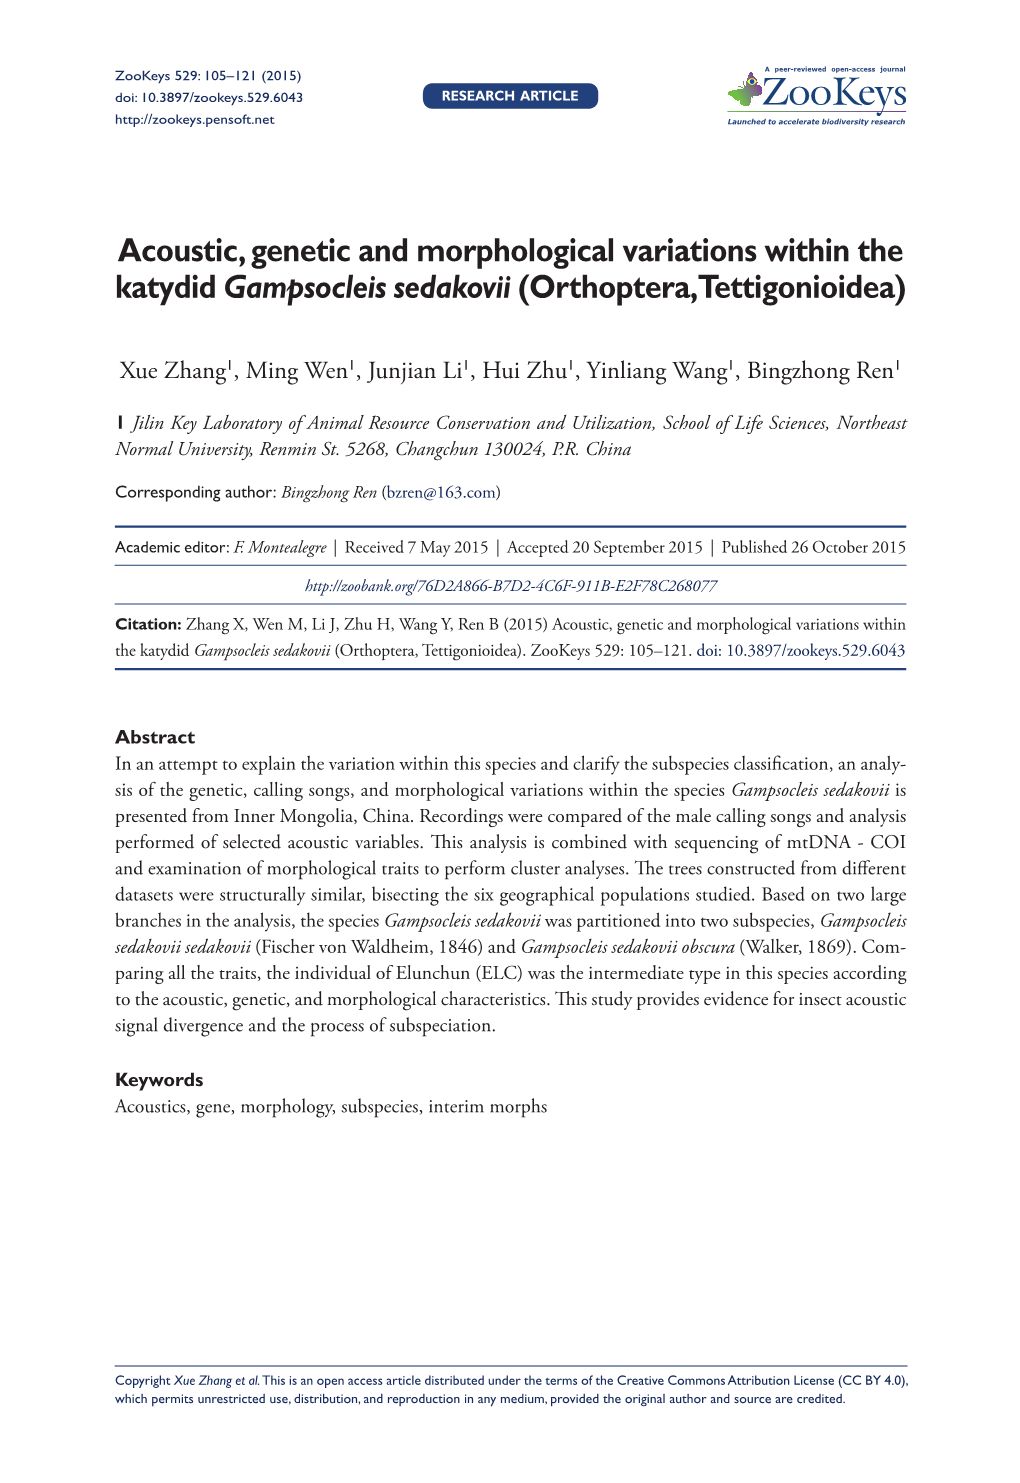 Acoustic, Genetic and Morphological Variations Within the Katydid Gampsocleis Sedakovii (Orthoptera, Tettigonioidea)